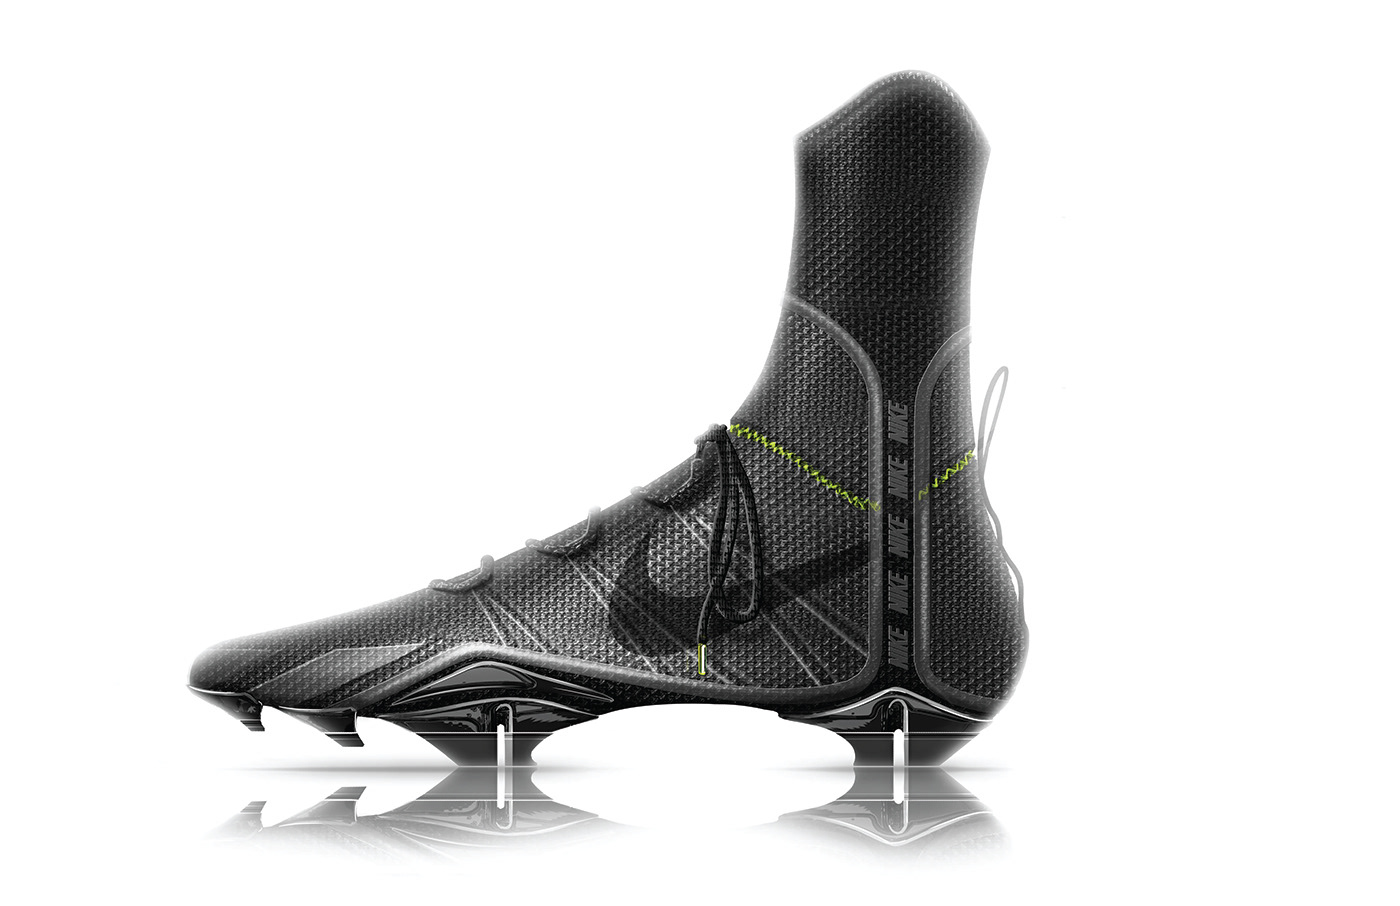 footwear design industrial design  Sportswear conceptkicks